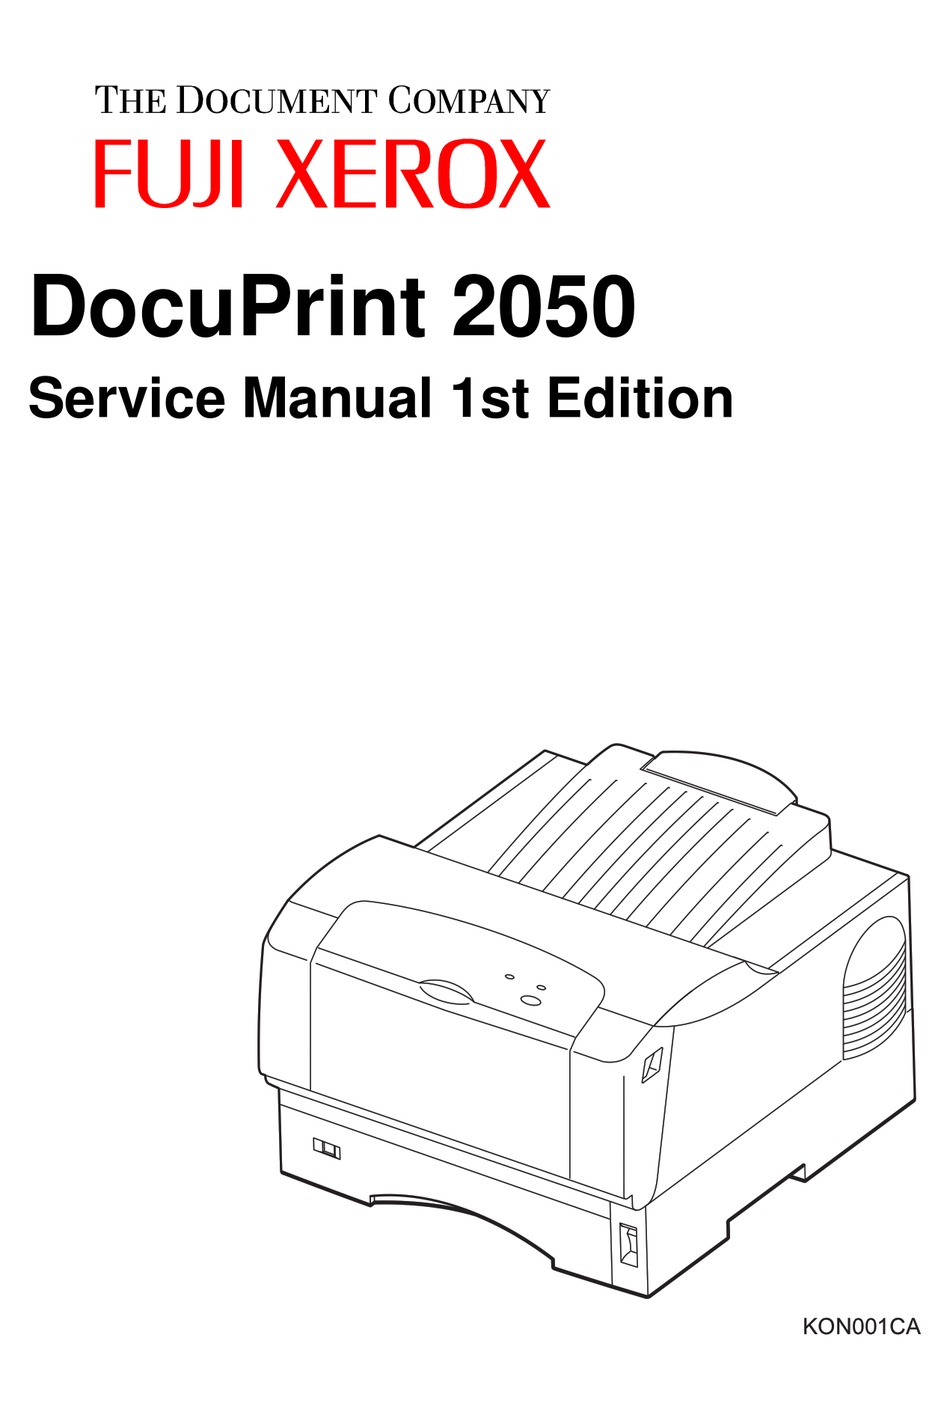 FUJI XEROX DOCUPRINT 2050 SERVICE MANUAL Pdf Download ManualsLib